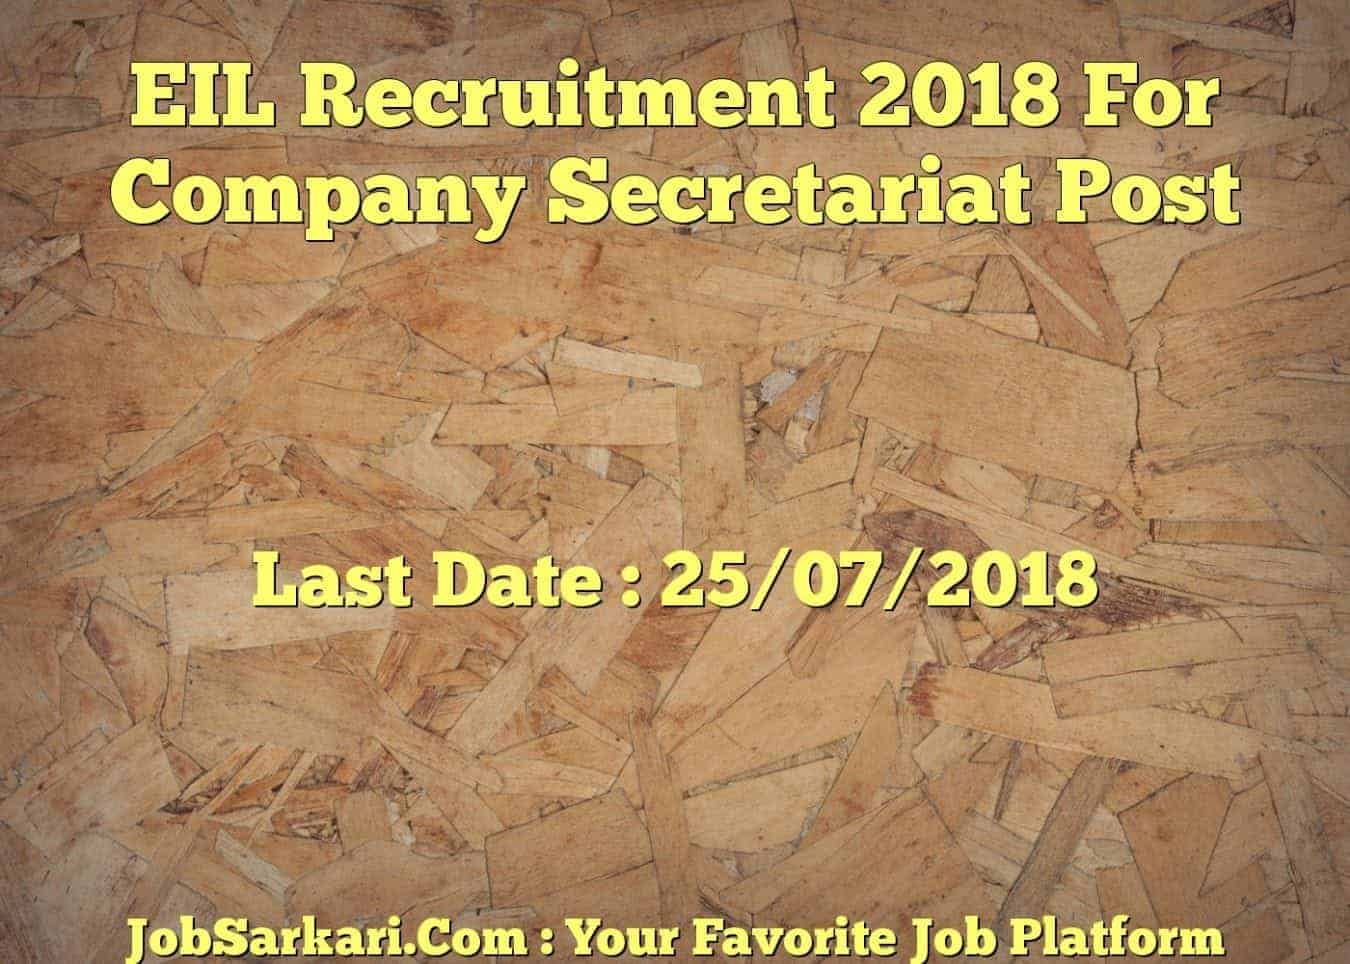 EIL Recruitment 2018 For Company Secretariat Post